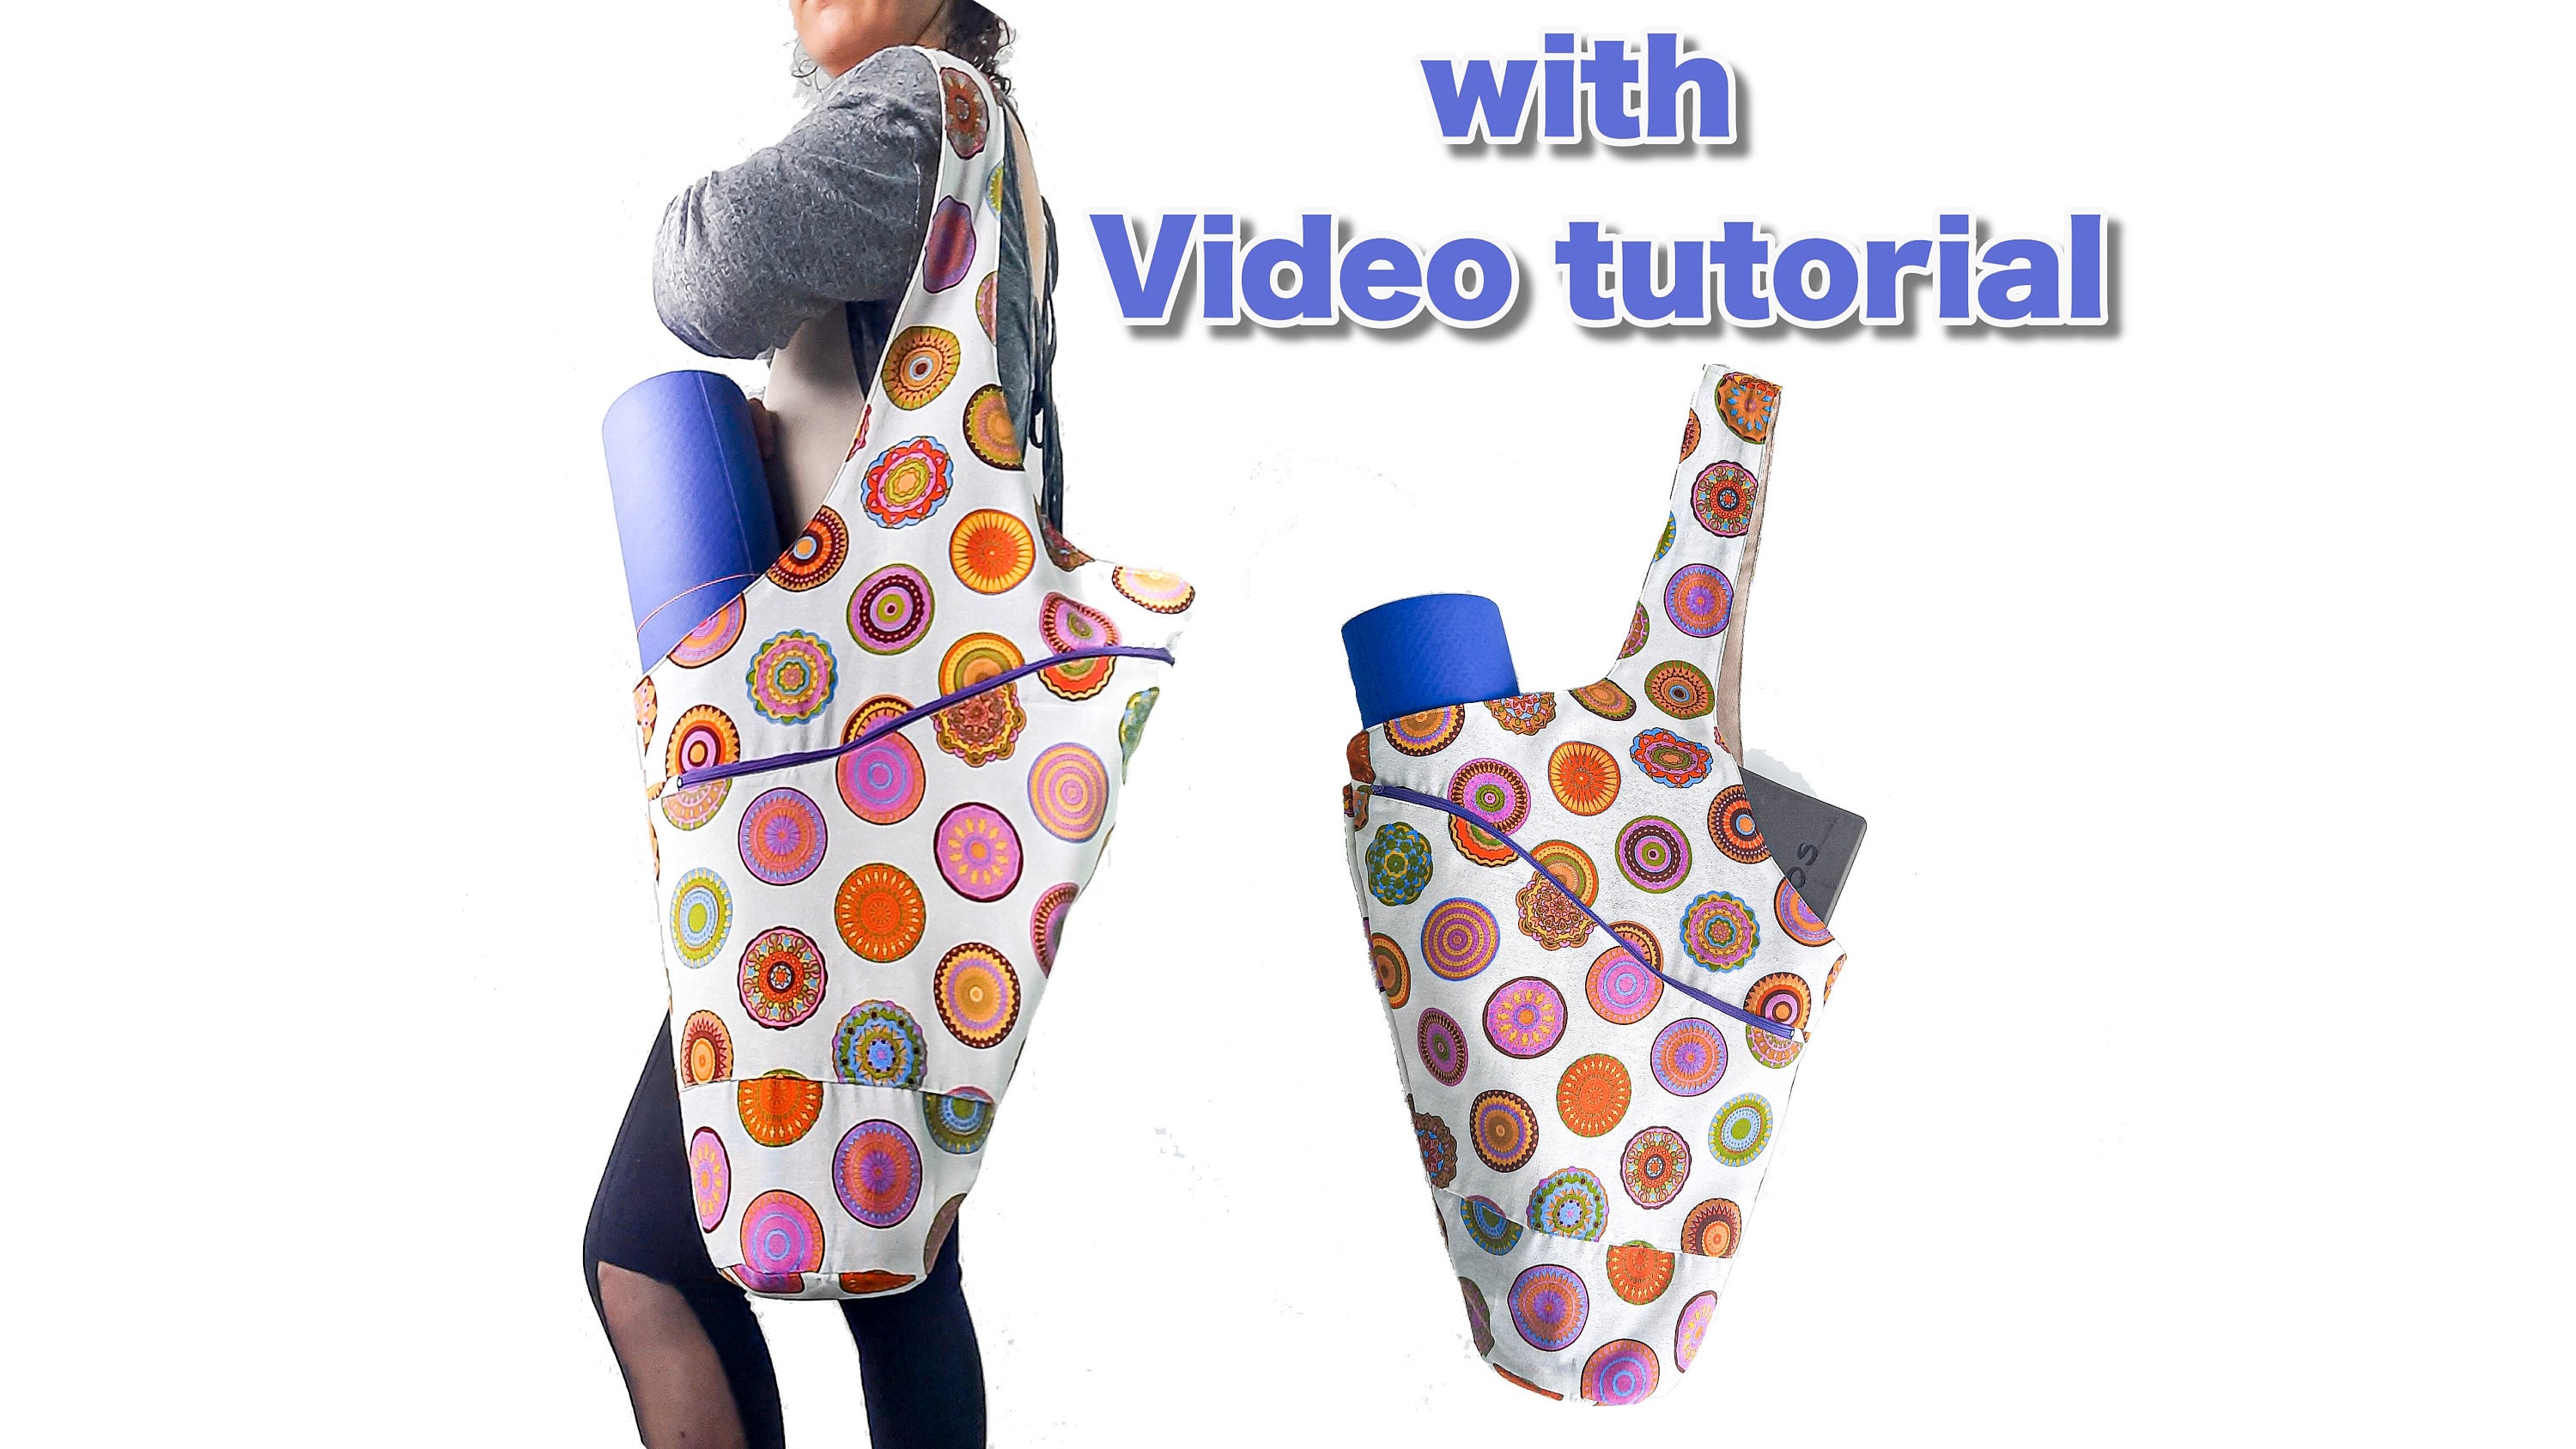 Minimal Tote Bag with Yoga Slider Patterns – Yabbey